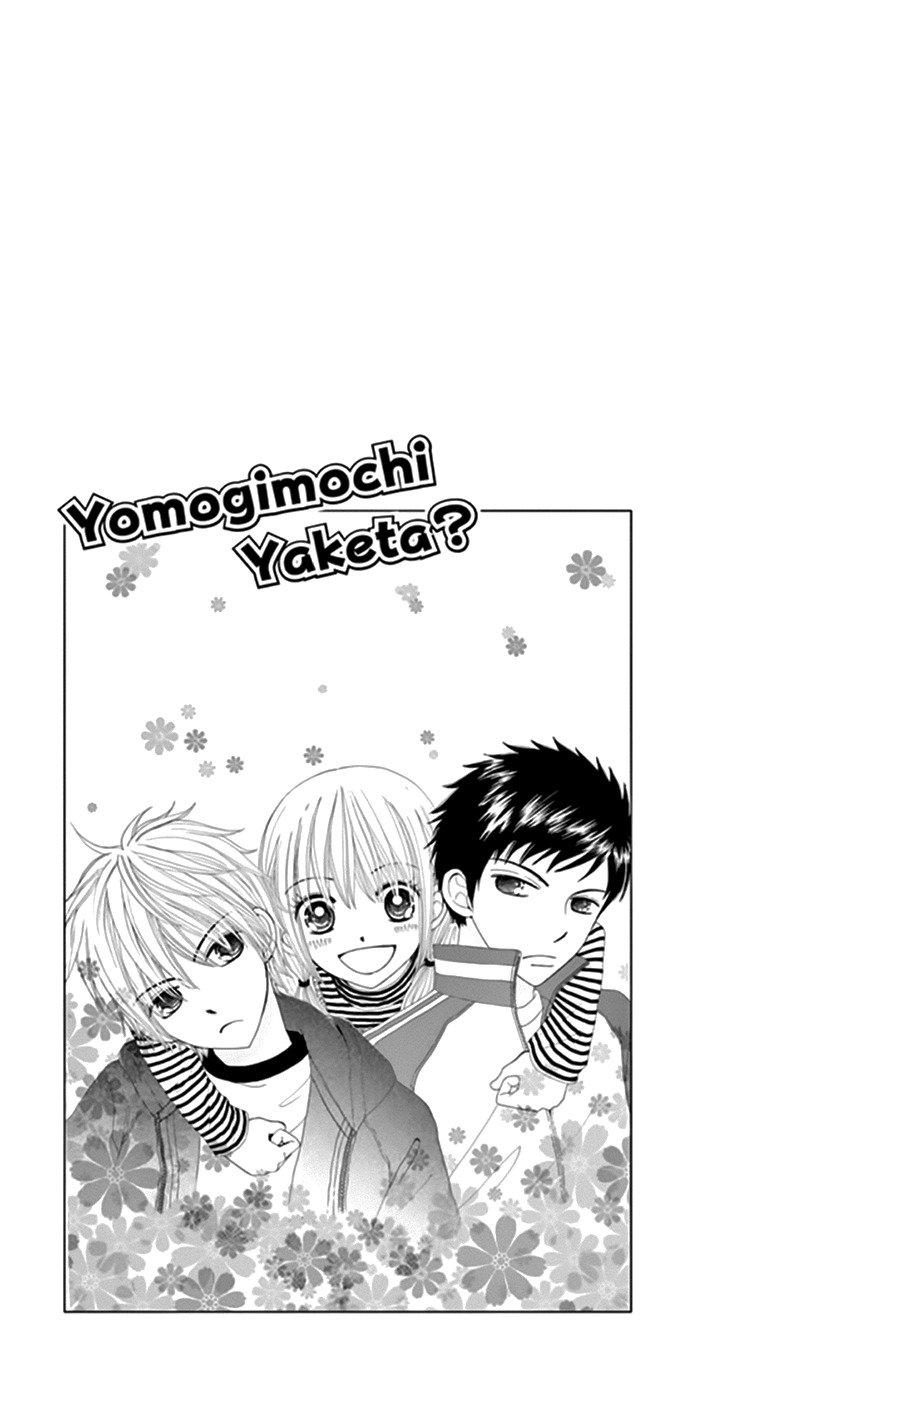 Yomogi Mochi Yaketa - episode 15 - 35